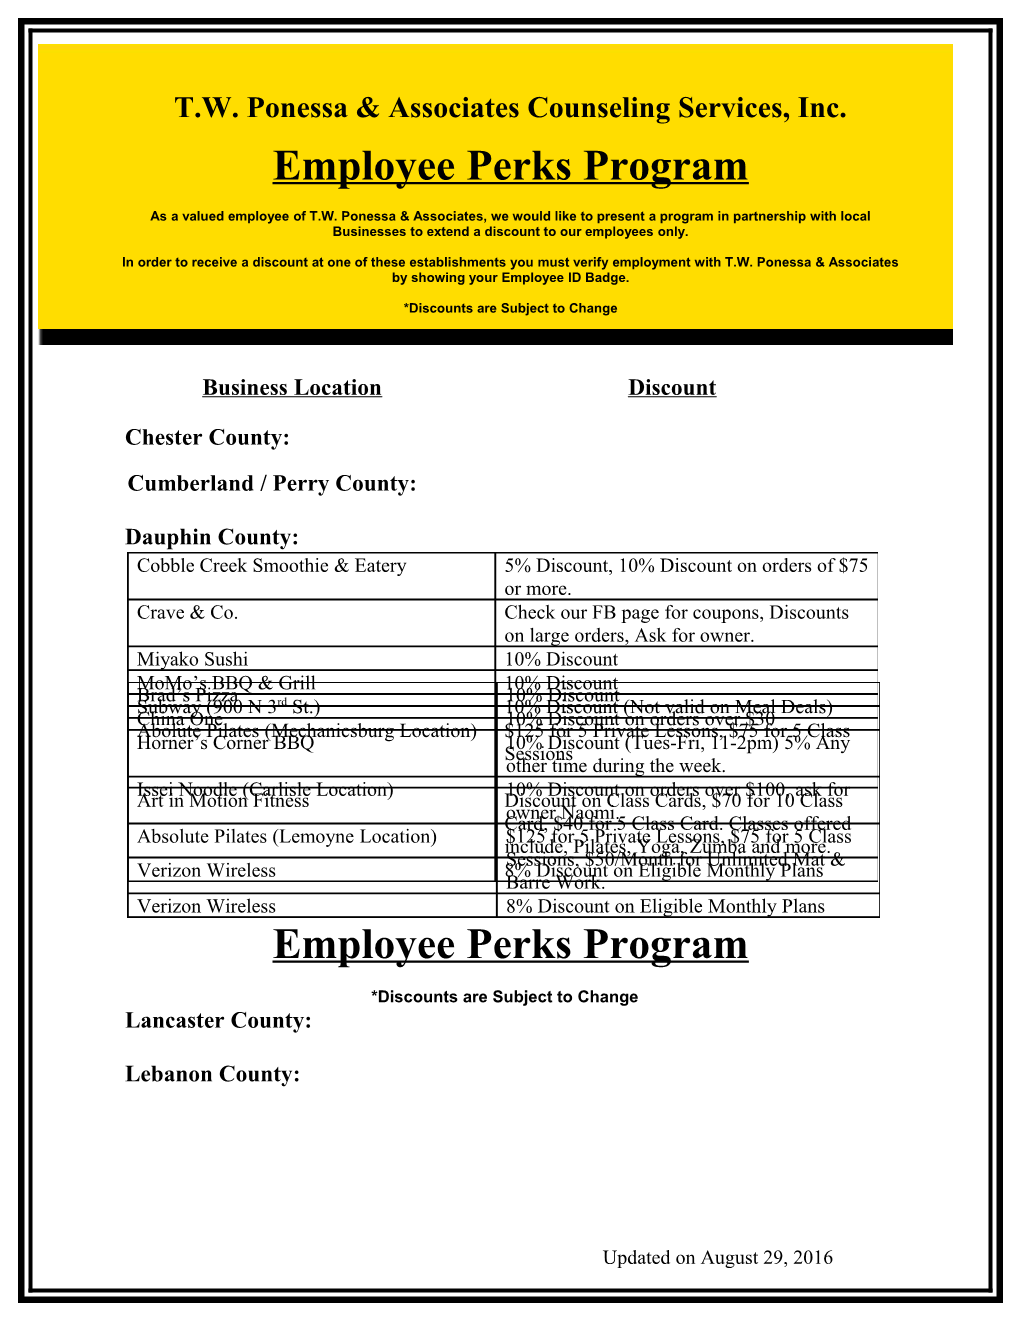 Employee Perks Program